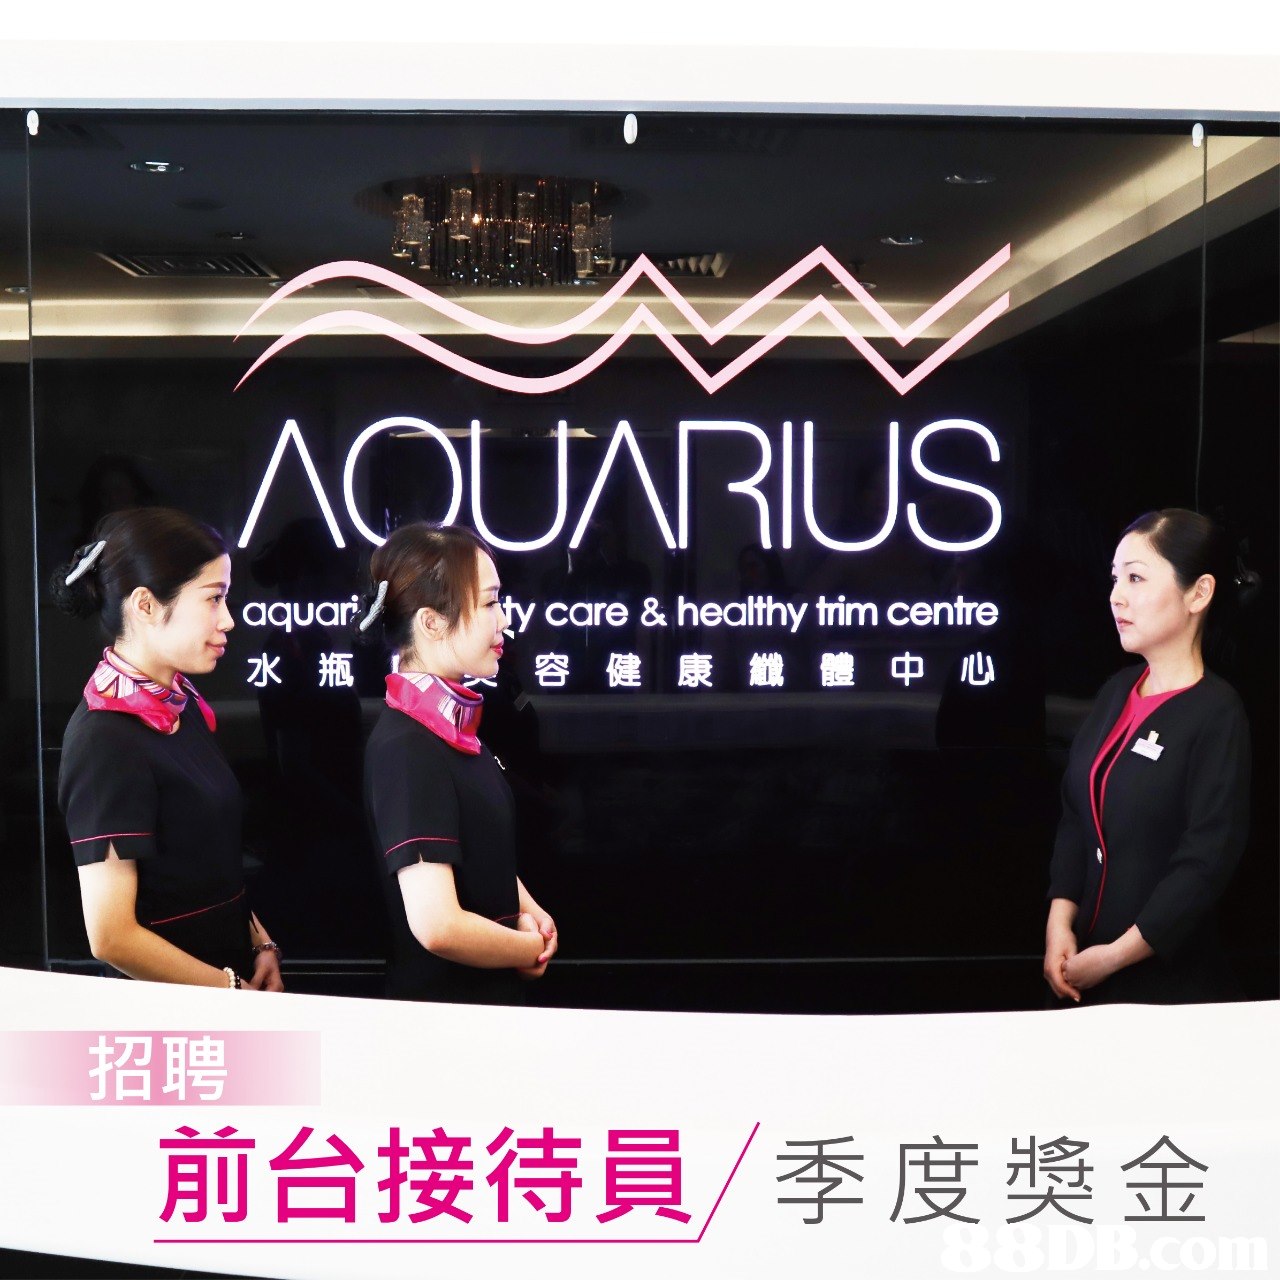 AQUARIUS aquar/y care & healthy trim centre 水瓶 容健康畿體中心 招聘 前台接待員/季度奬金  Font,Stage,